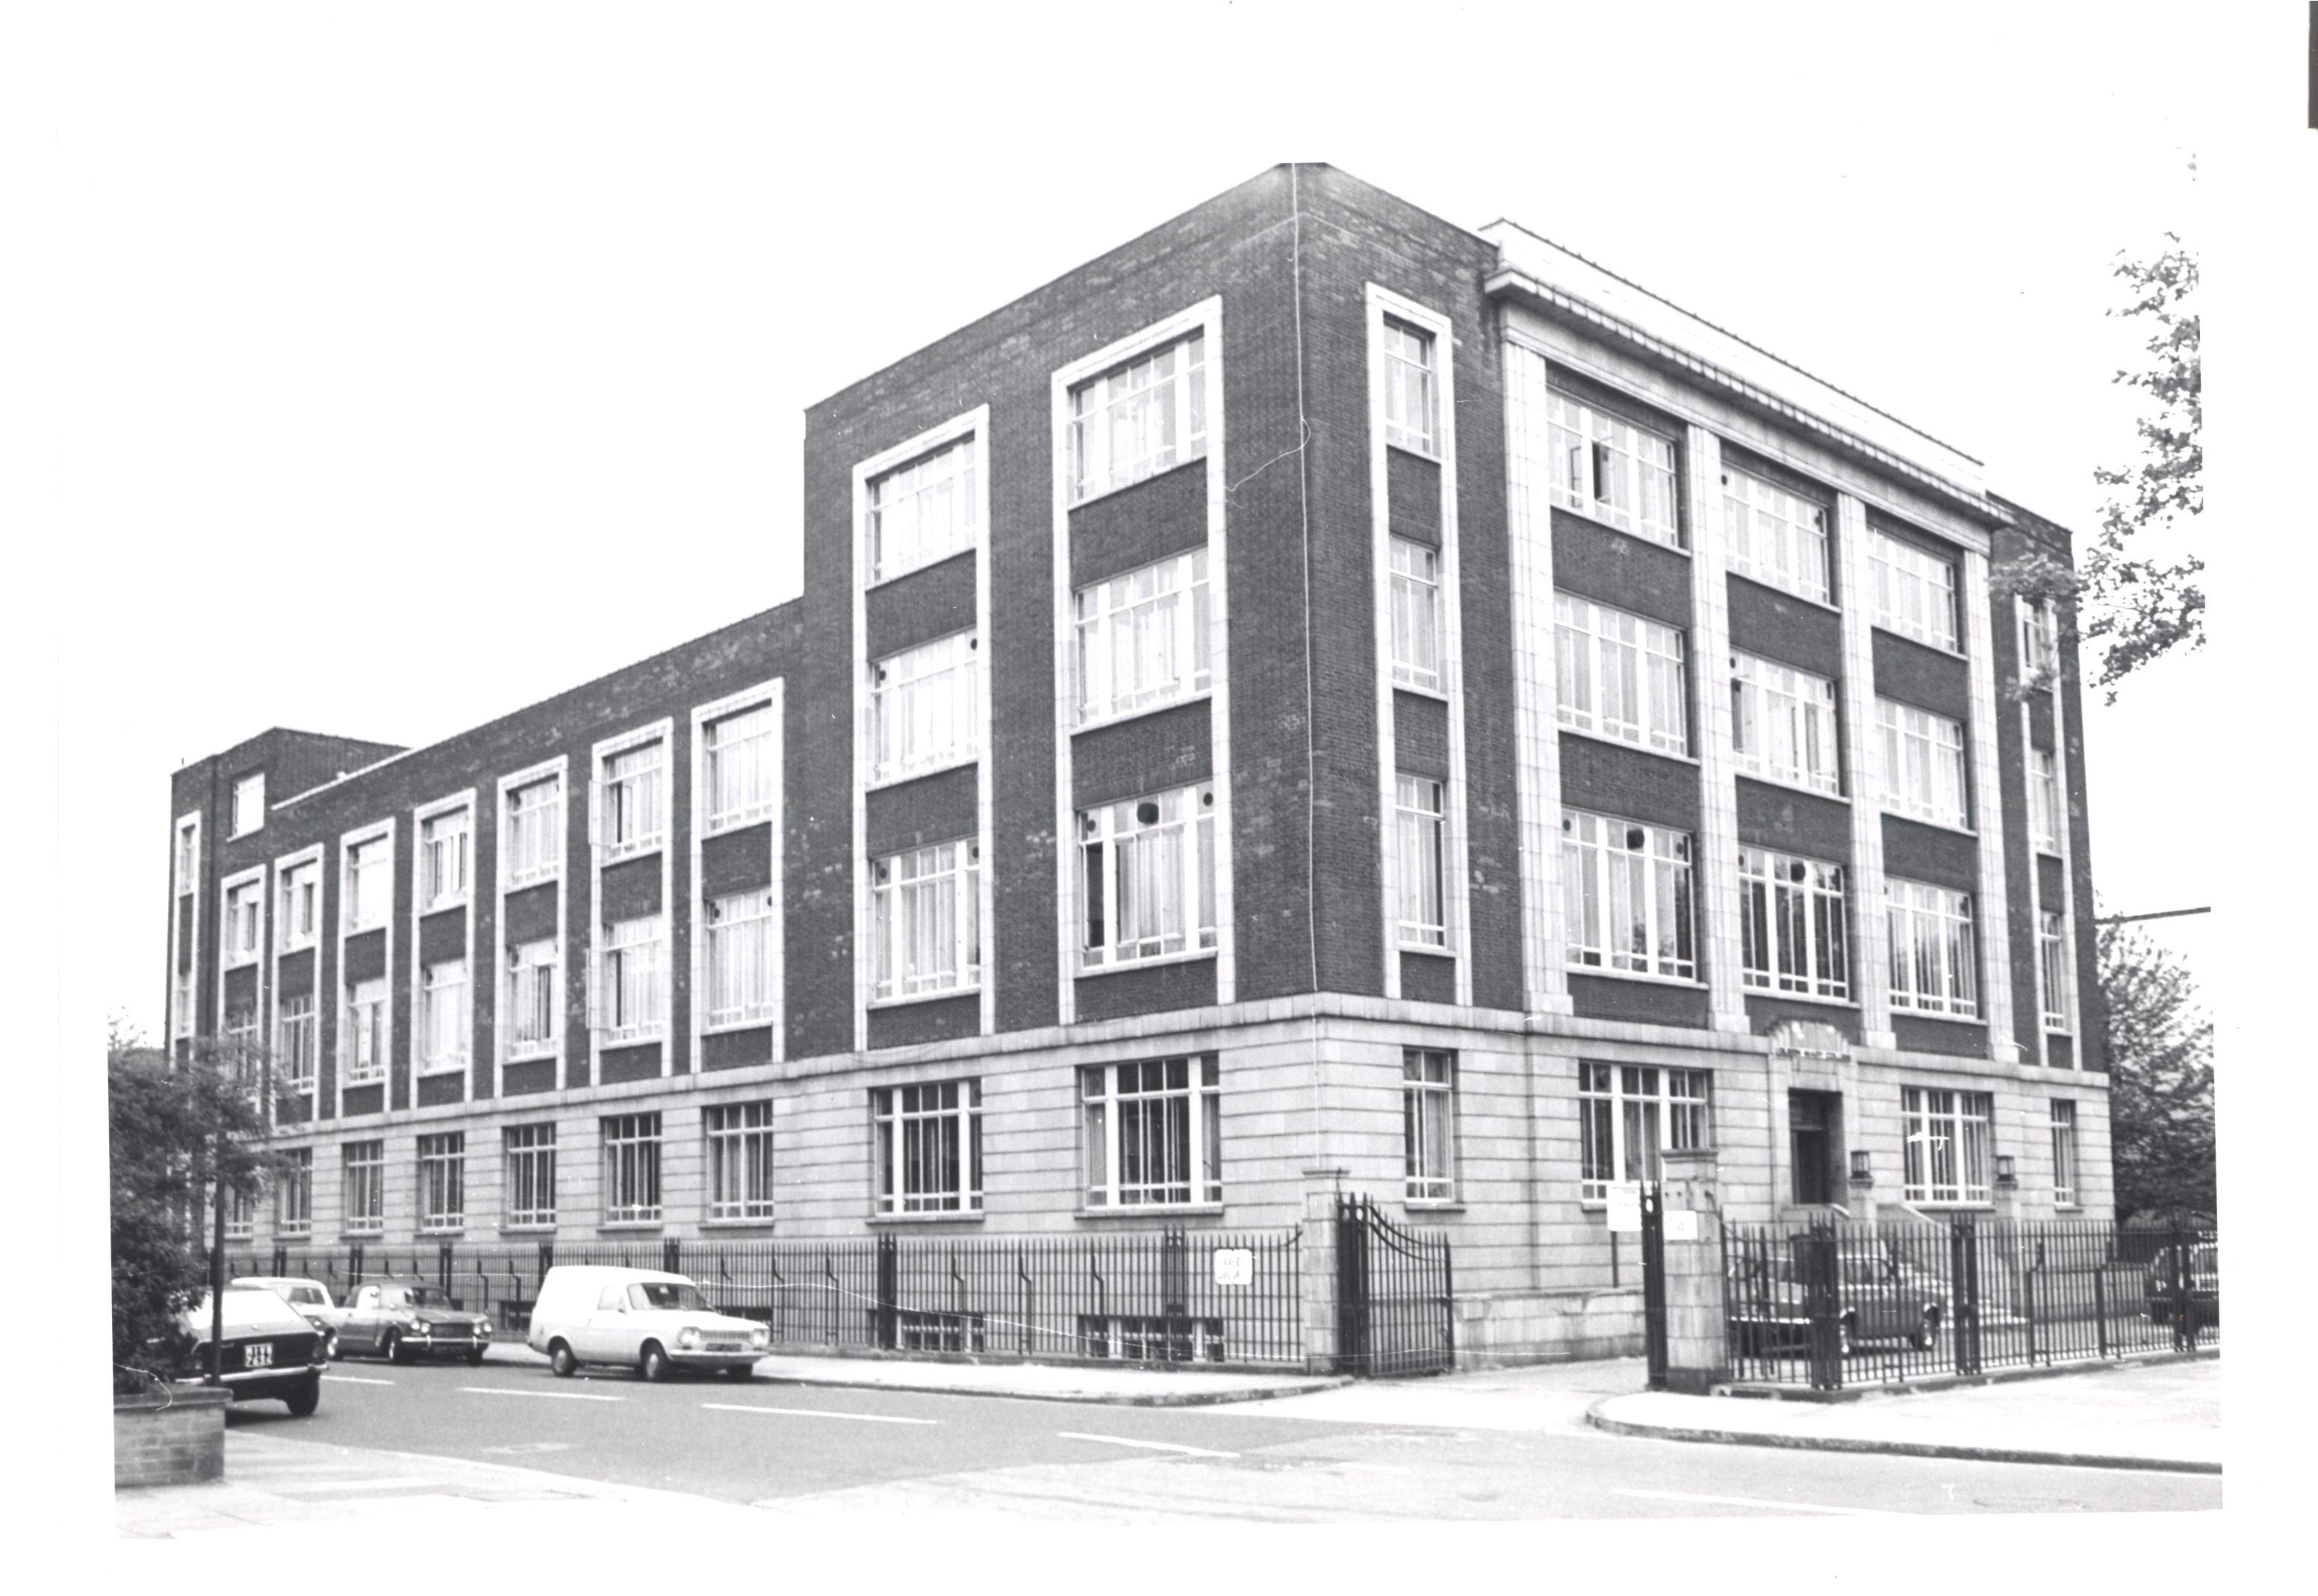 Archive Photo of Department of Economics Building